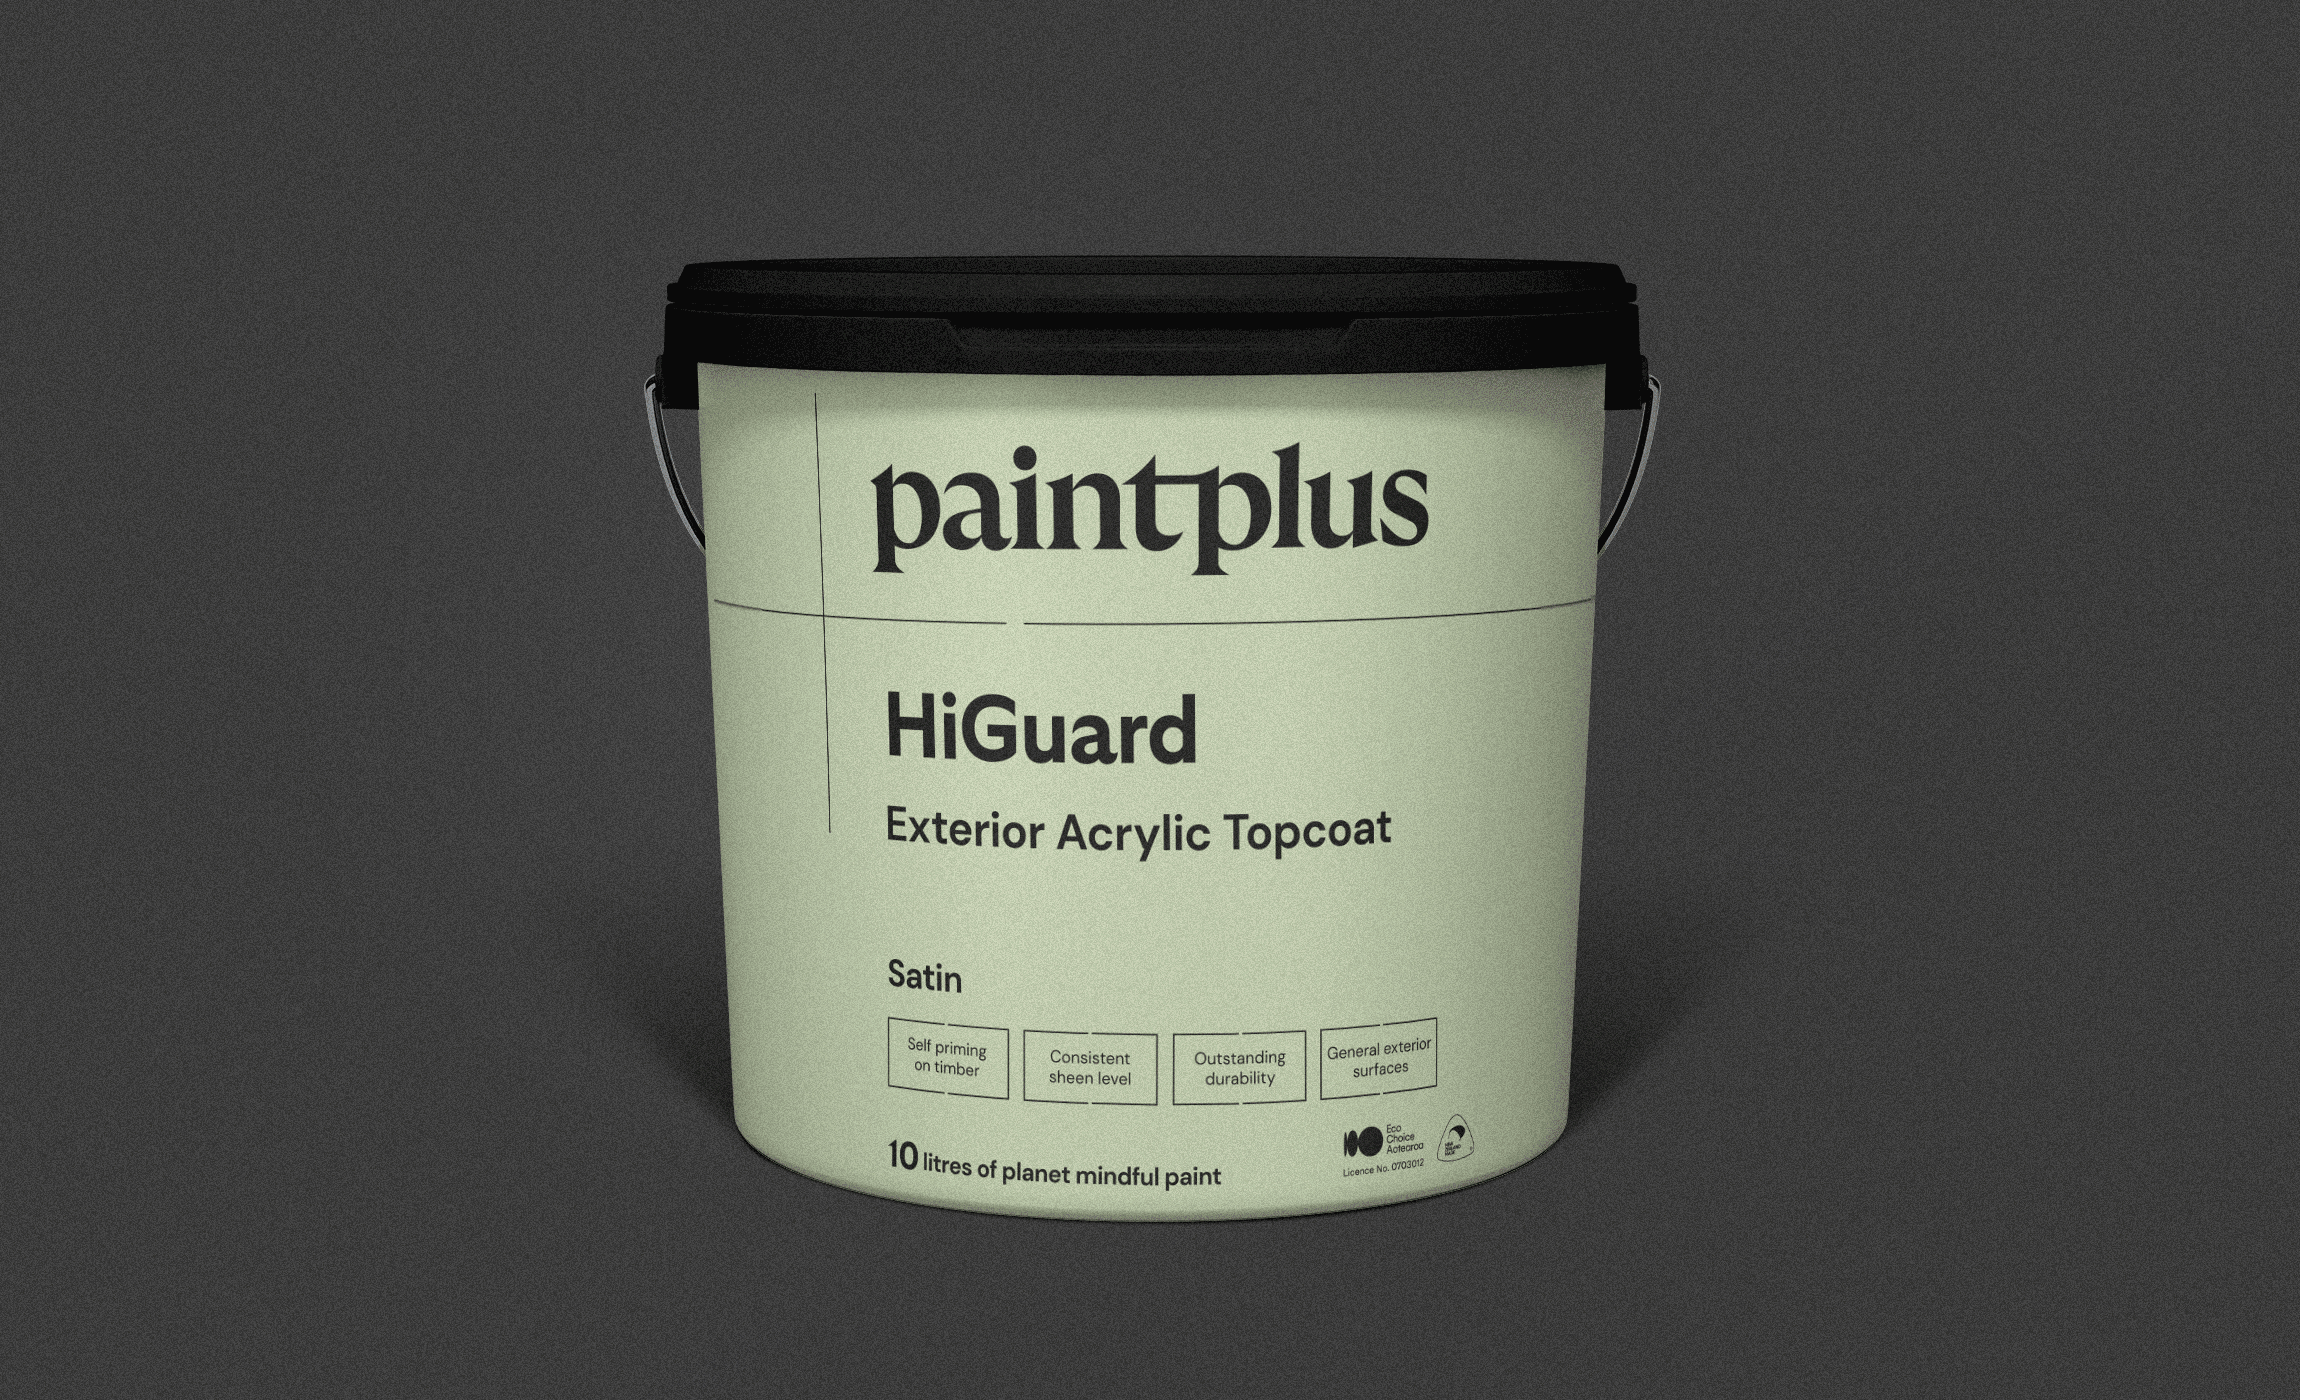 PaintPlus packaging design